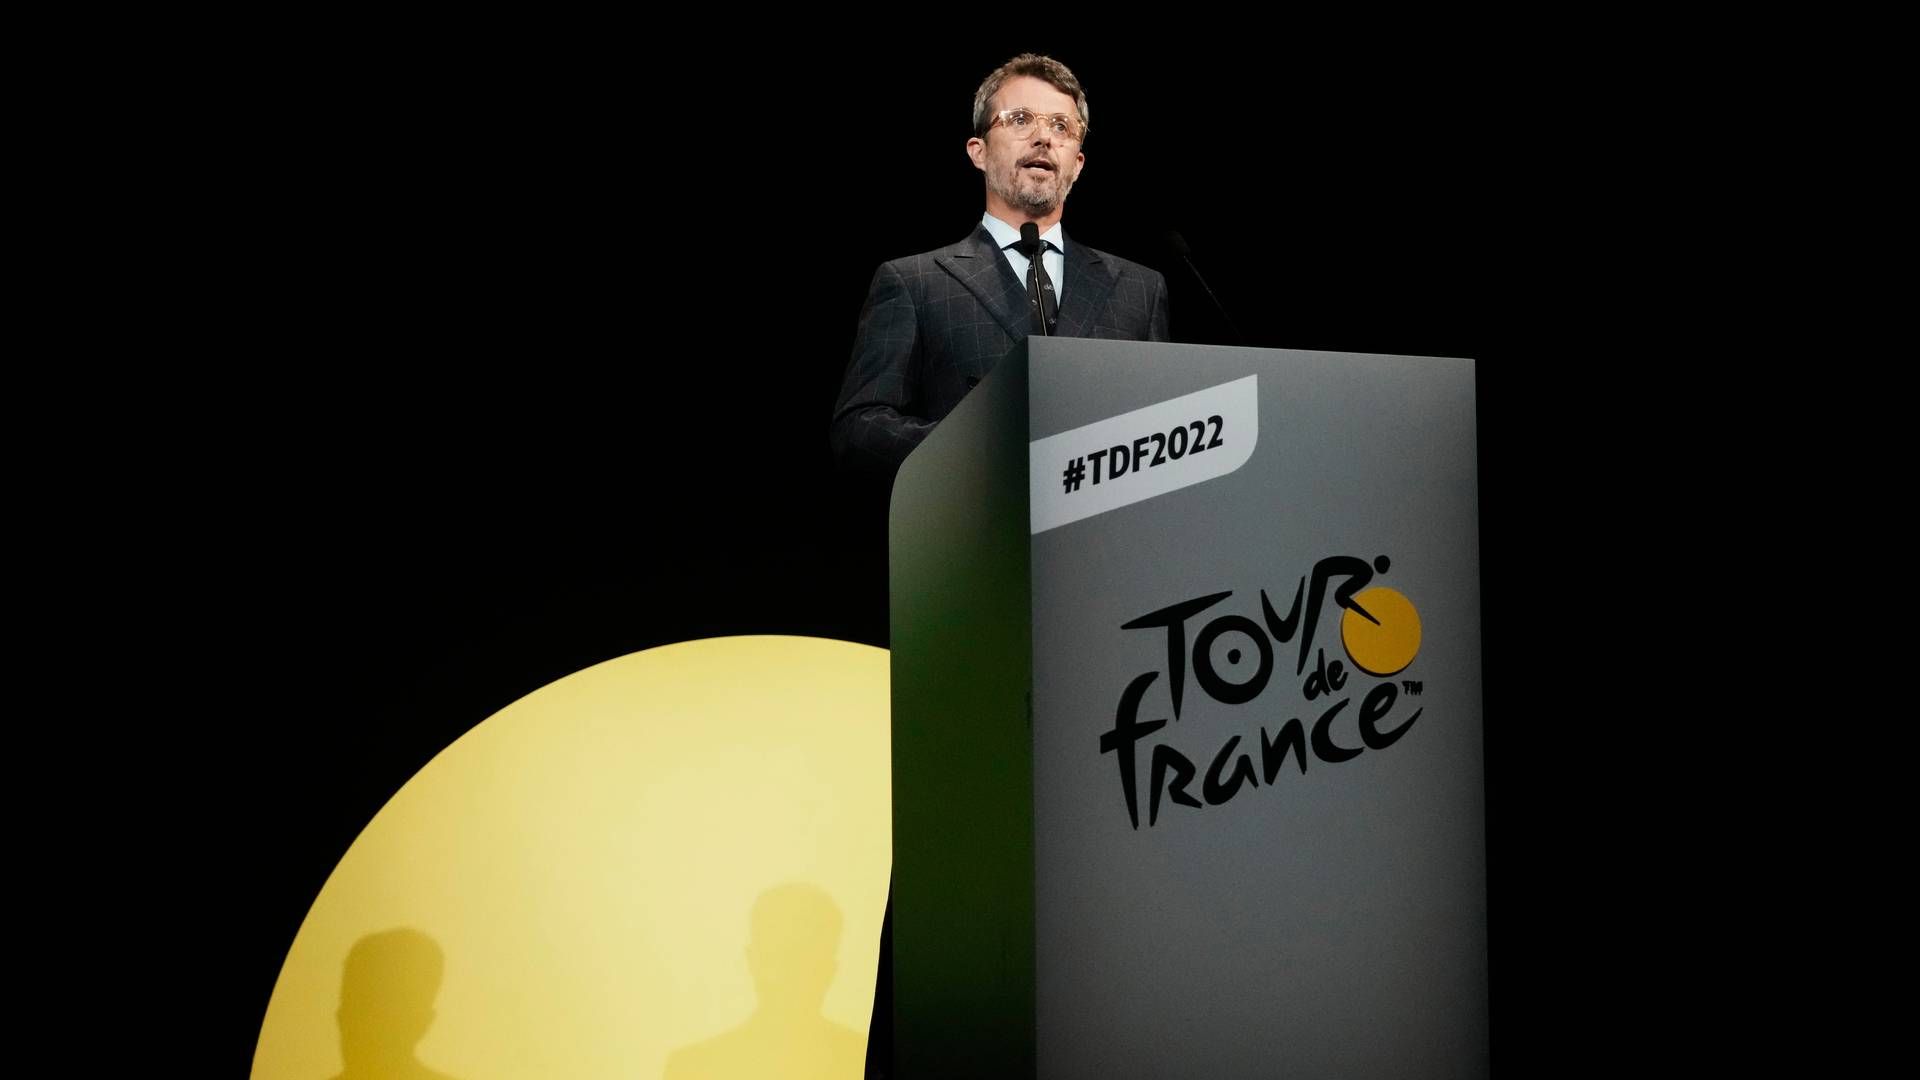 Kronprins Frederik ved præsentationen af Tour de France 2020. | Foto: Thibault Camus/AP/Ritzau Scanpix